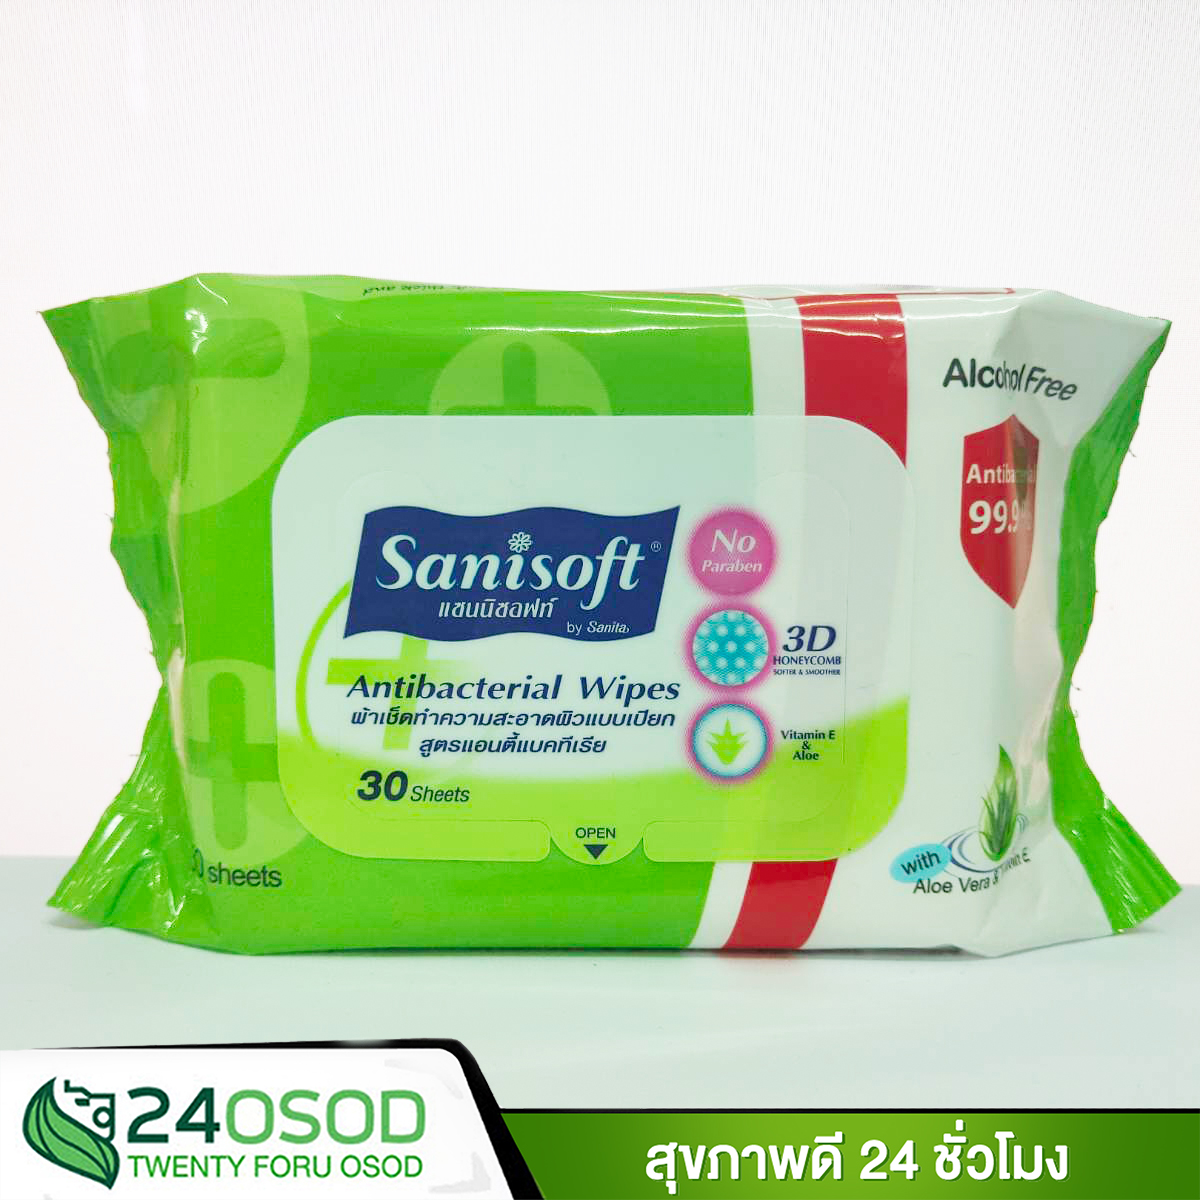 Sanisoft antibacterial wipes แซนนิซอฟท์ ผ้าเช็ดทำความสะอาดสูตรแอนตี้แบคทีเรีย ผ้าเปียก ทิชชู่เปียก ผ้าทำความสะอาด